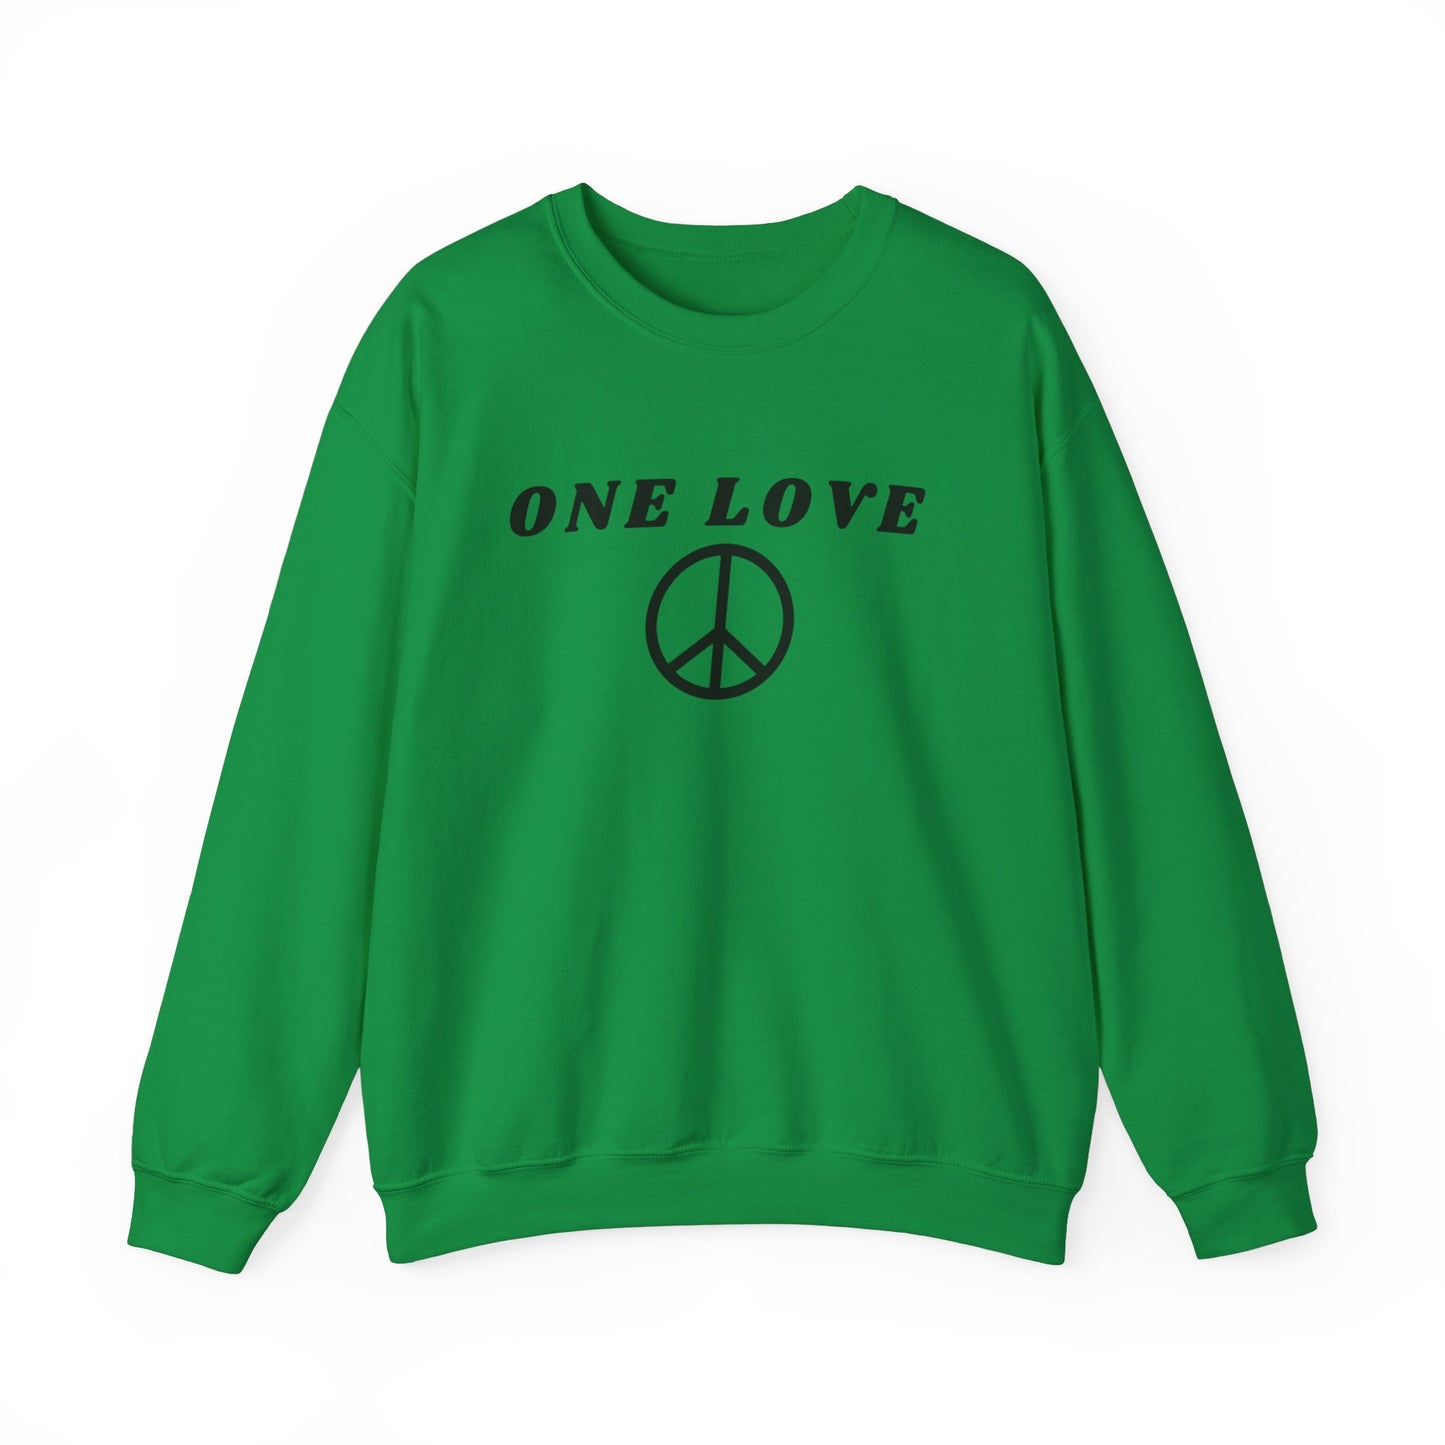 ONE LOVE PEACE SWEATSHIRT